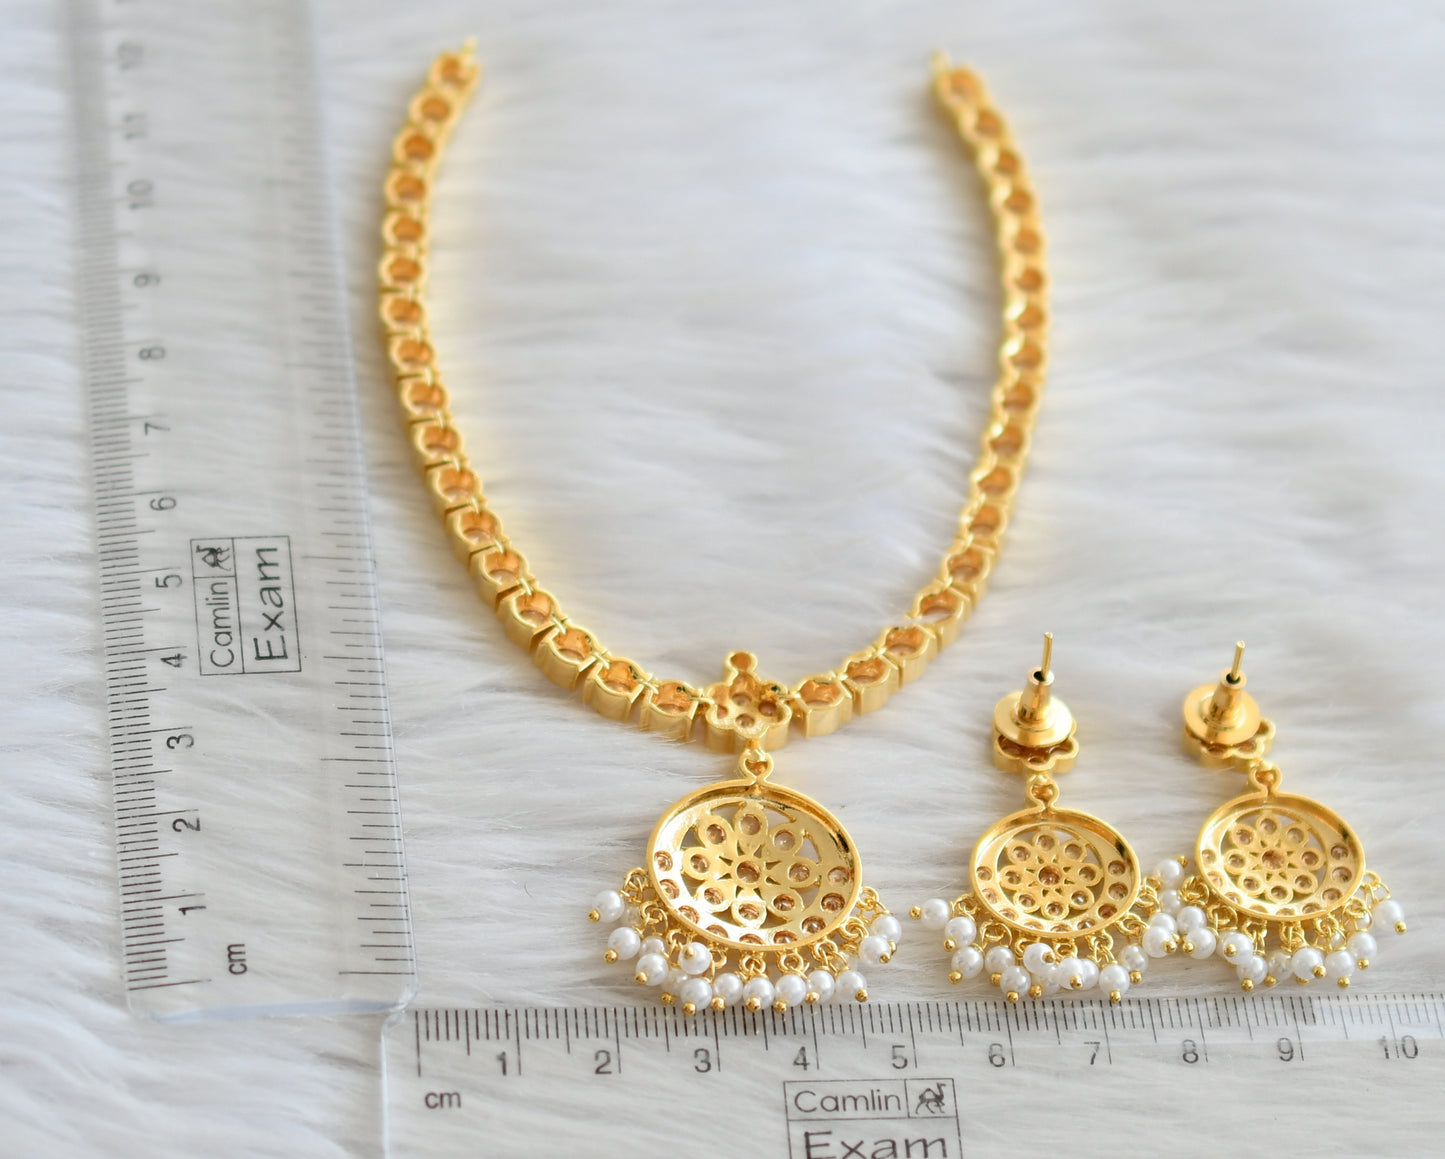 Gold tone ad gold stone south indian style attigai/necklace set dj-45885